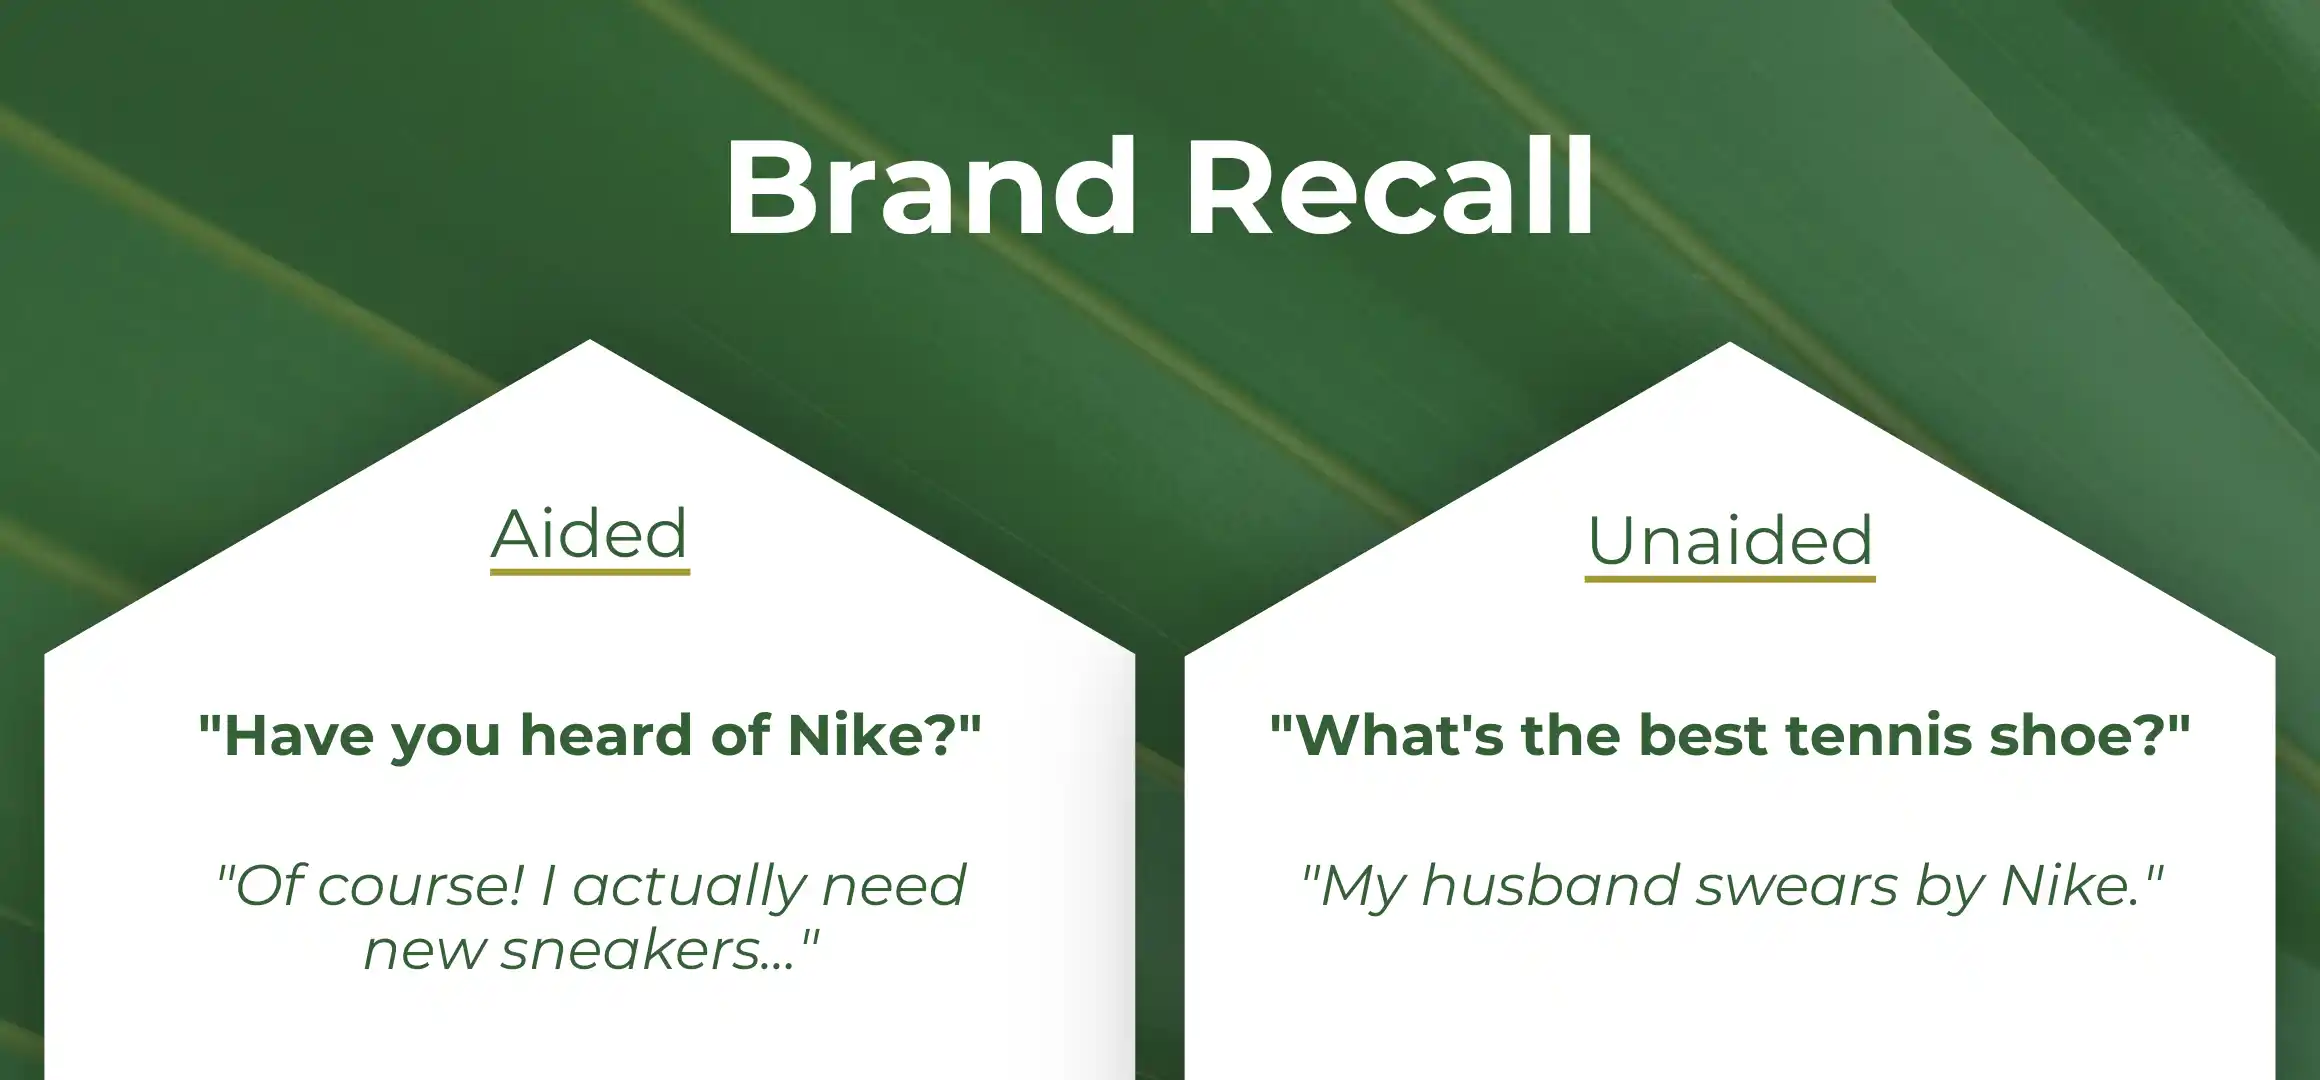 Brand Recall examples